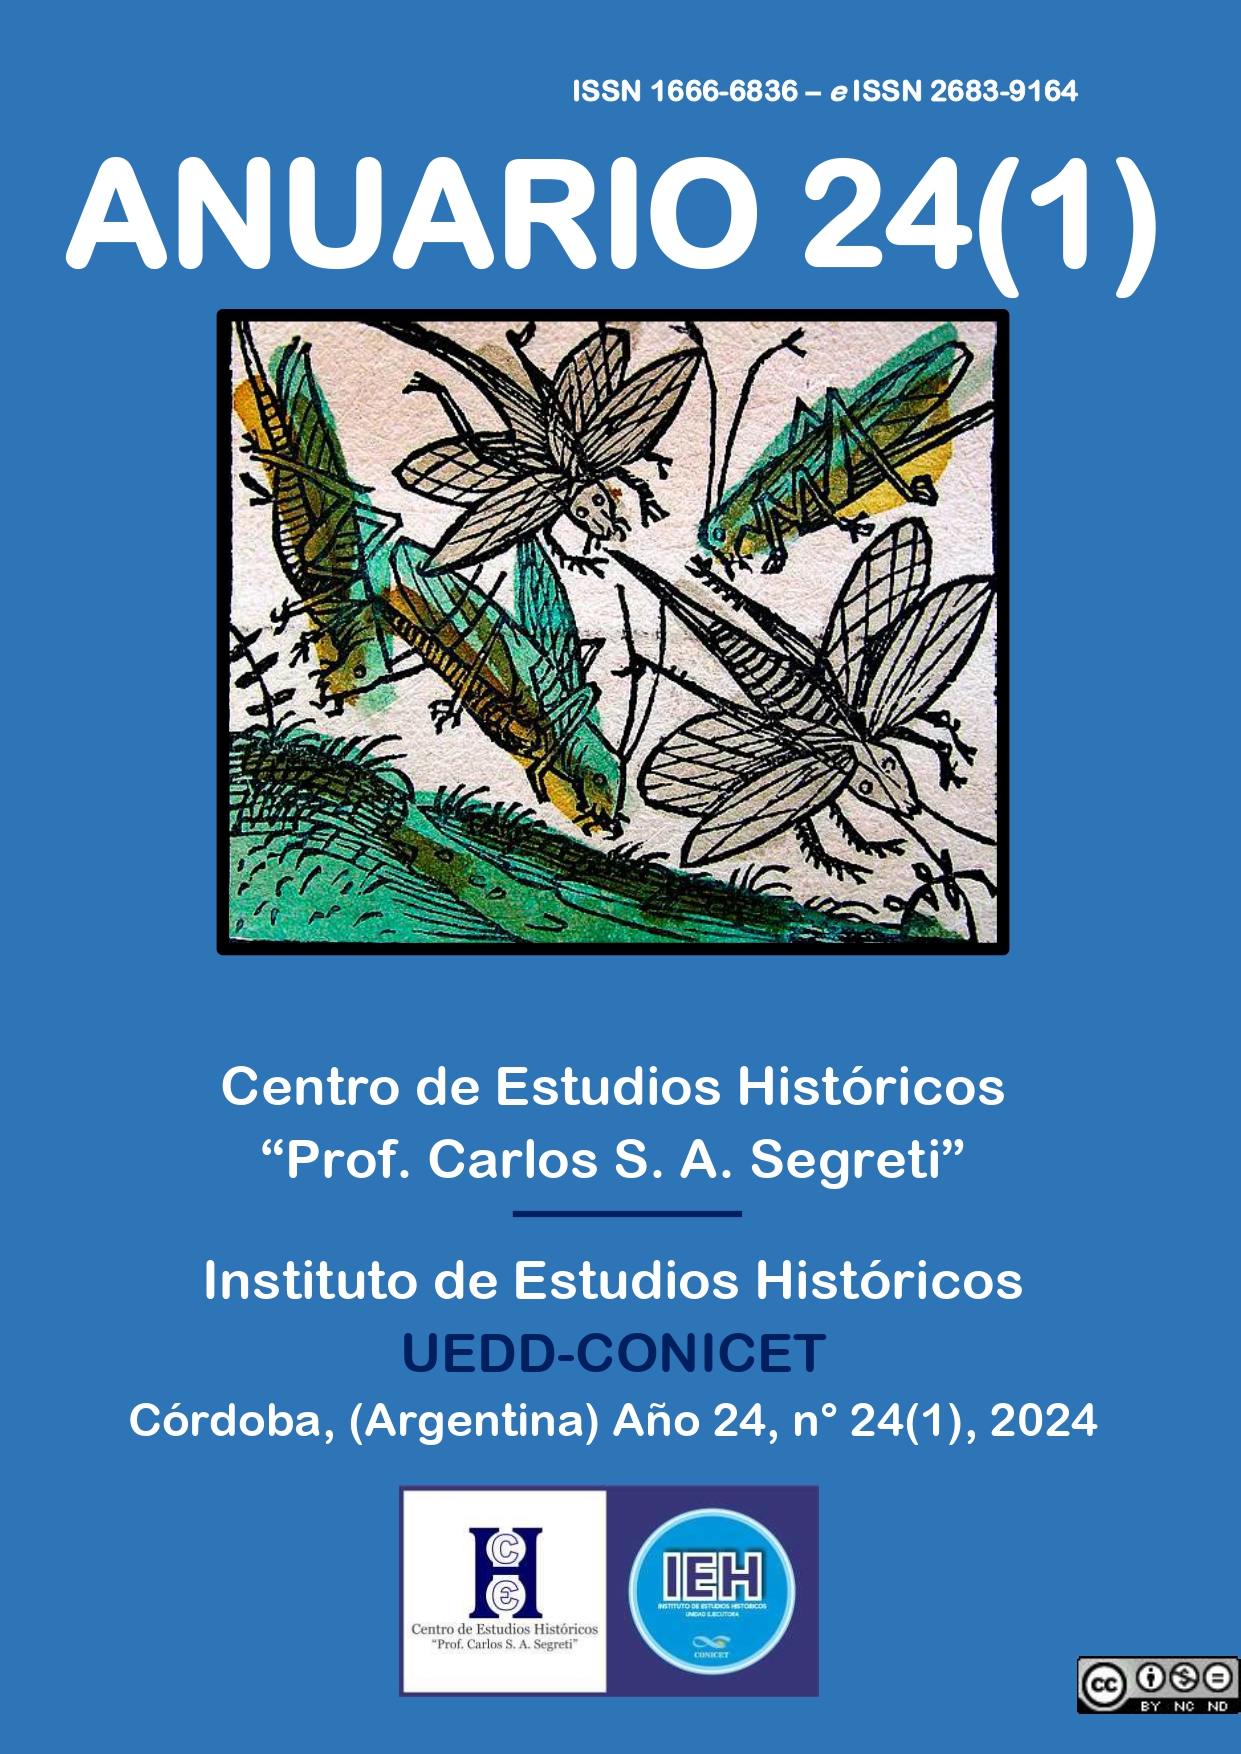 					Afficher Vol. 24 No 1 (2024): Anuario del Centro de Estudios Históricos "Prof. Carlos S. A. Segreti" 24(1)
				